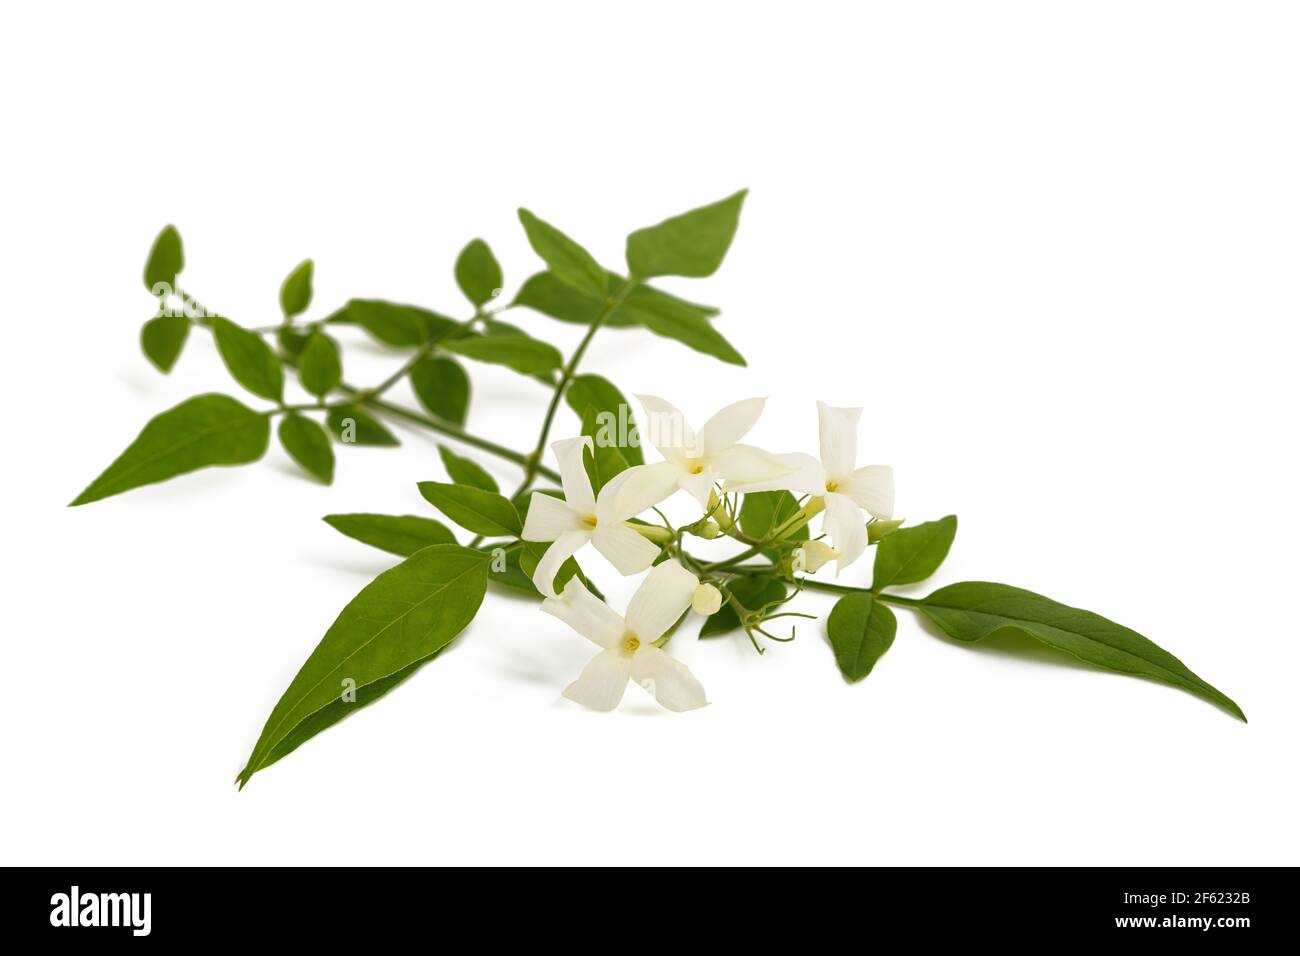 Jasmine plant with flowers isolated on white background Stock Photo